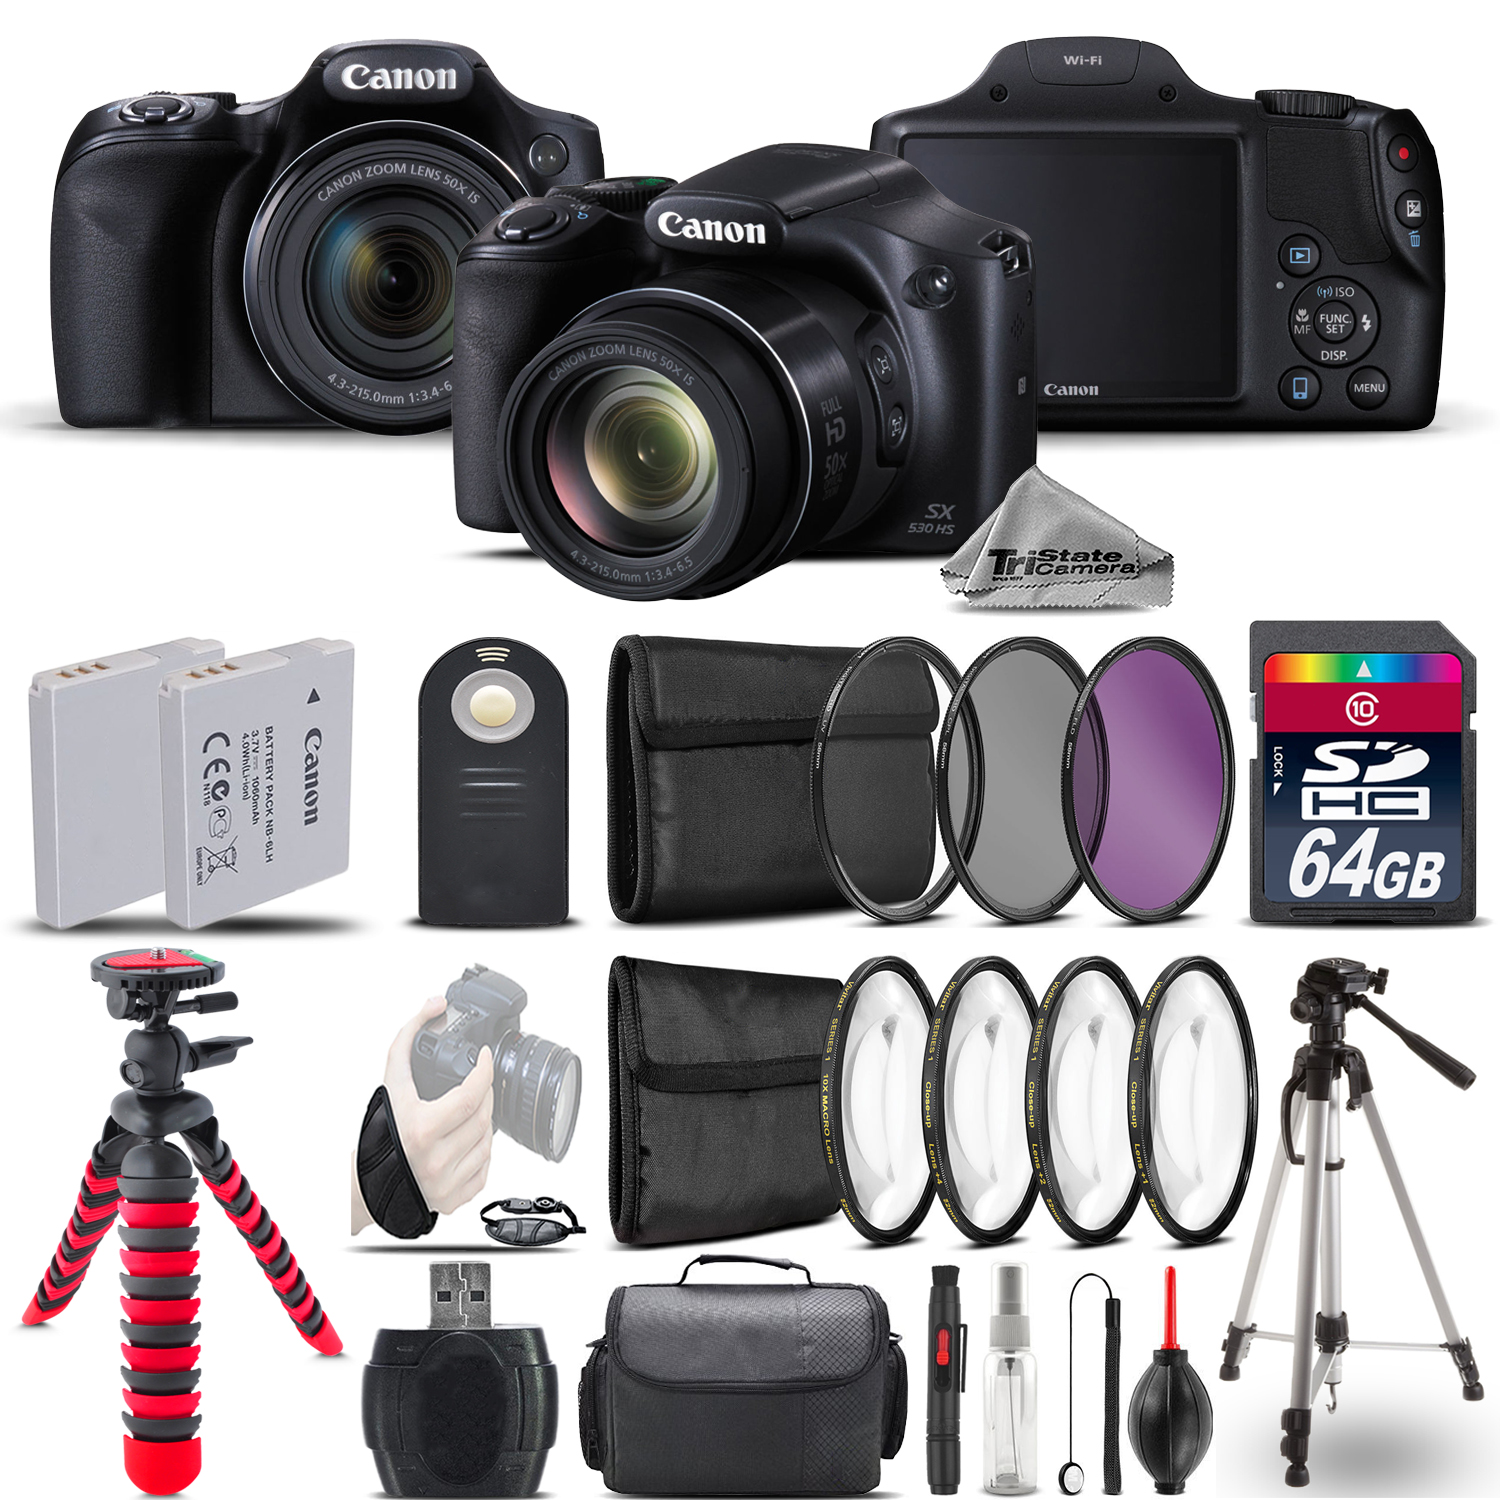 PowerShot SX530 HS Digital Camera + 2 x Tripod  + EXT BAT + Filter - 64GB *FREE SHIPPING*